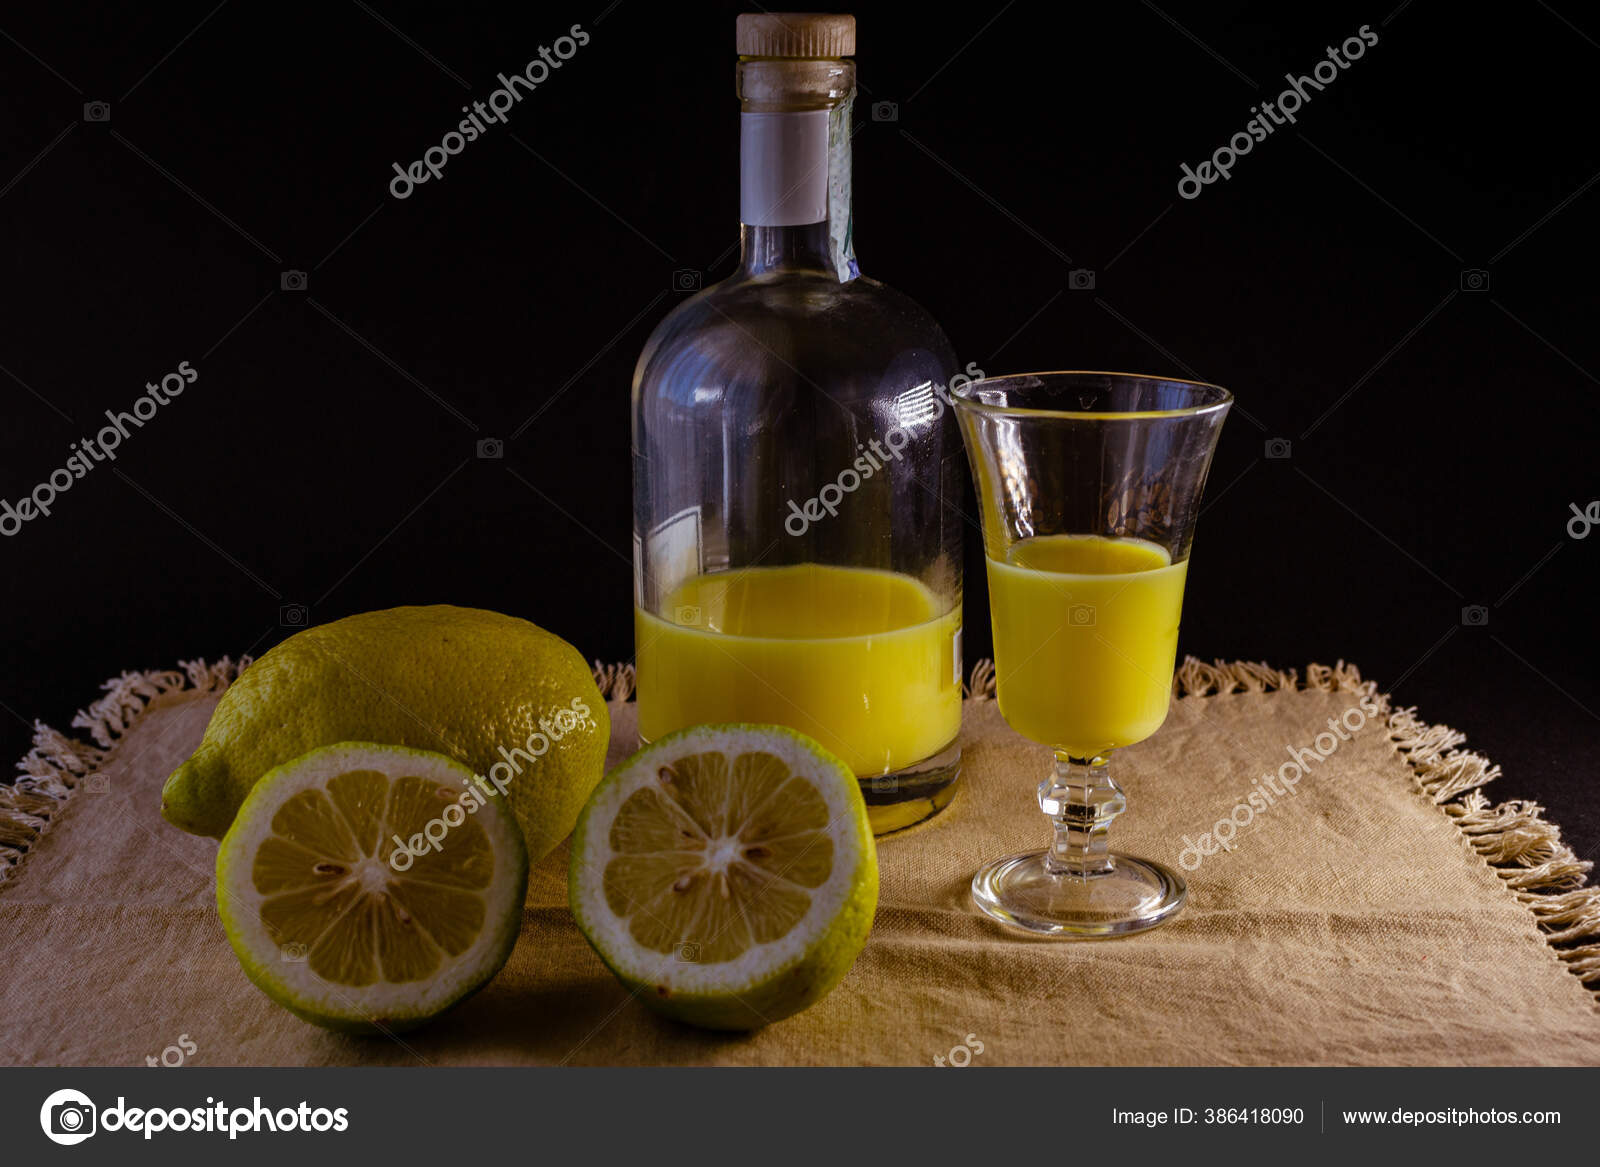 https://st4.depositphotos.com/27464894/38641/i/1600/depositphotos_386418090-stock-photo-limoncello-traditional-italian-lemon-liqueur.jpg